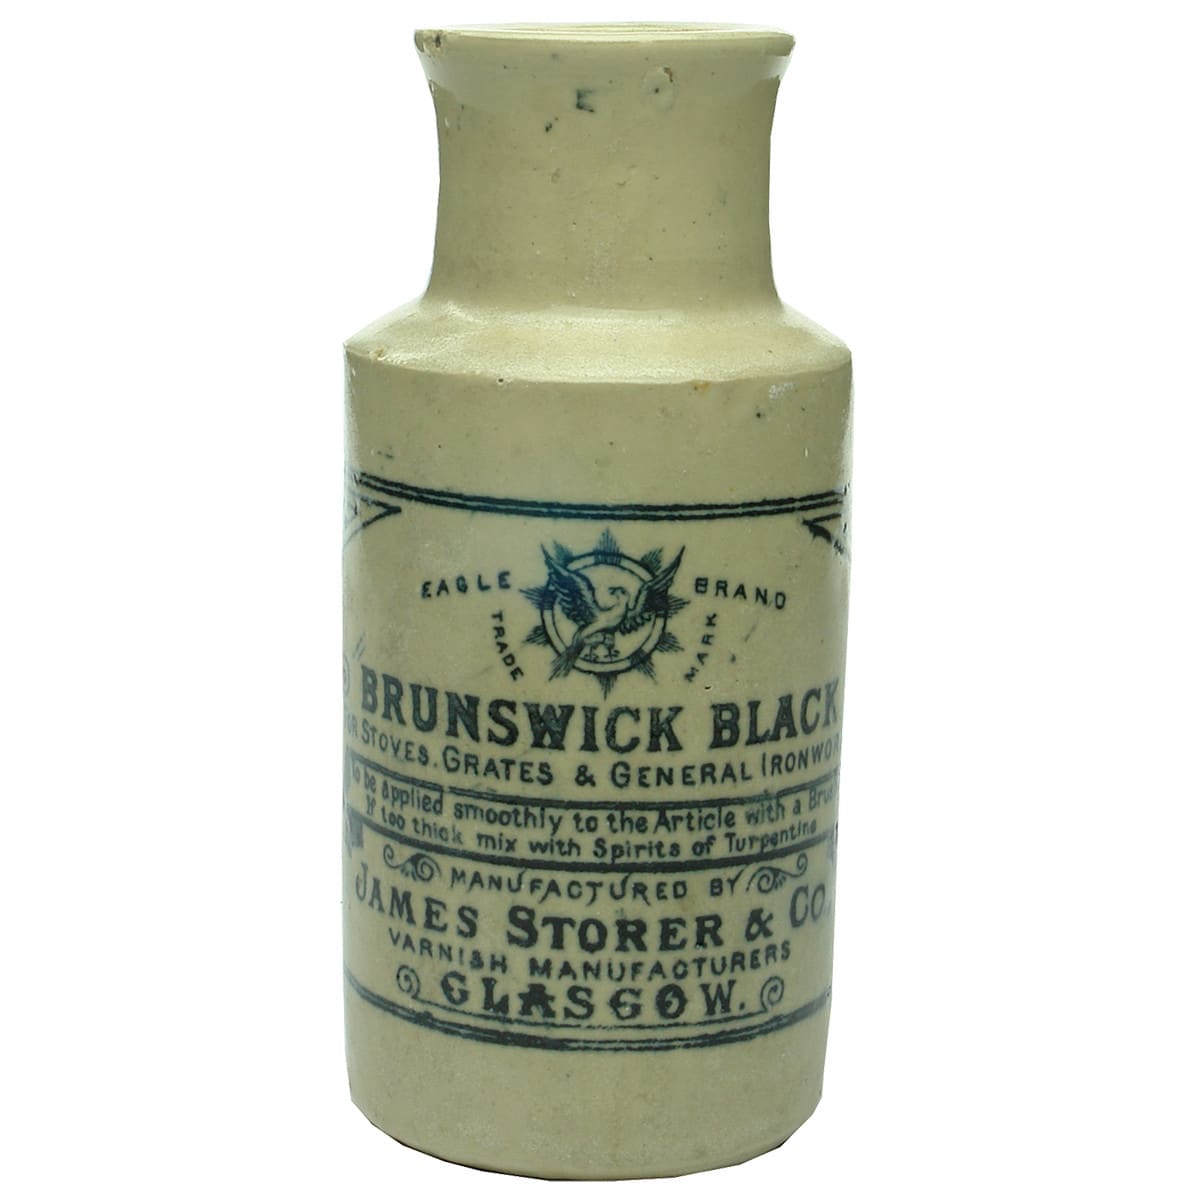 Blacking. James Storer Brunswick Black, Glasgow. 13 oz.